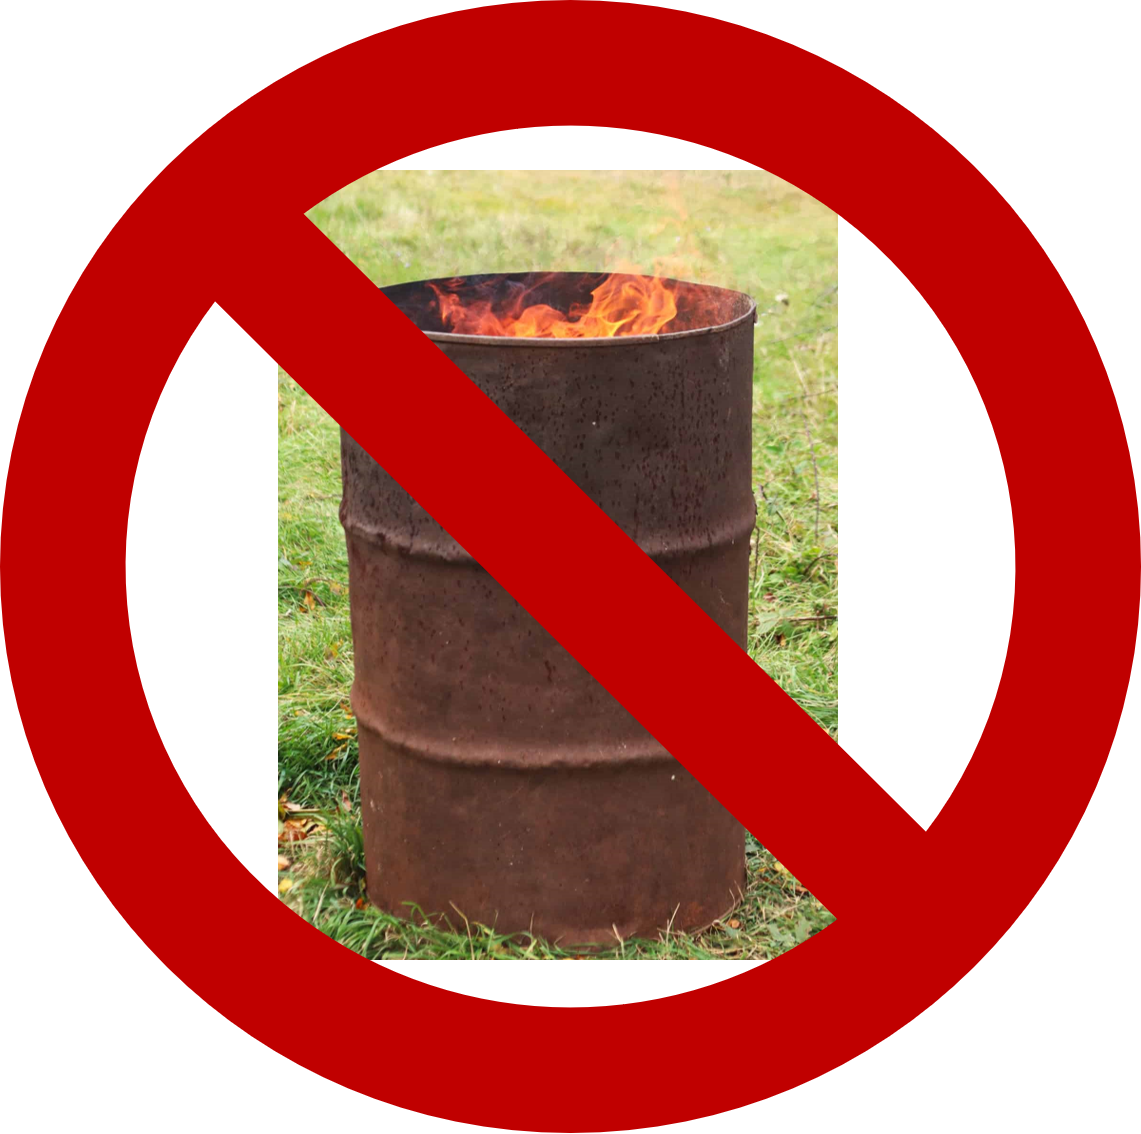 Burn Barrels are Not Permitted in the Muni